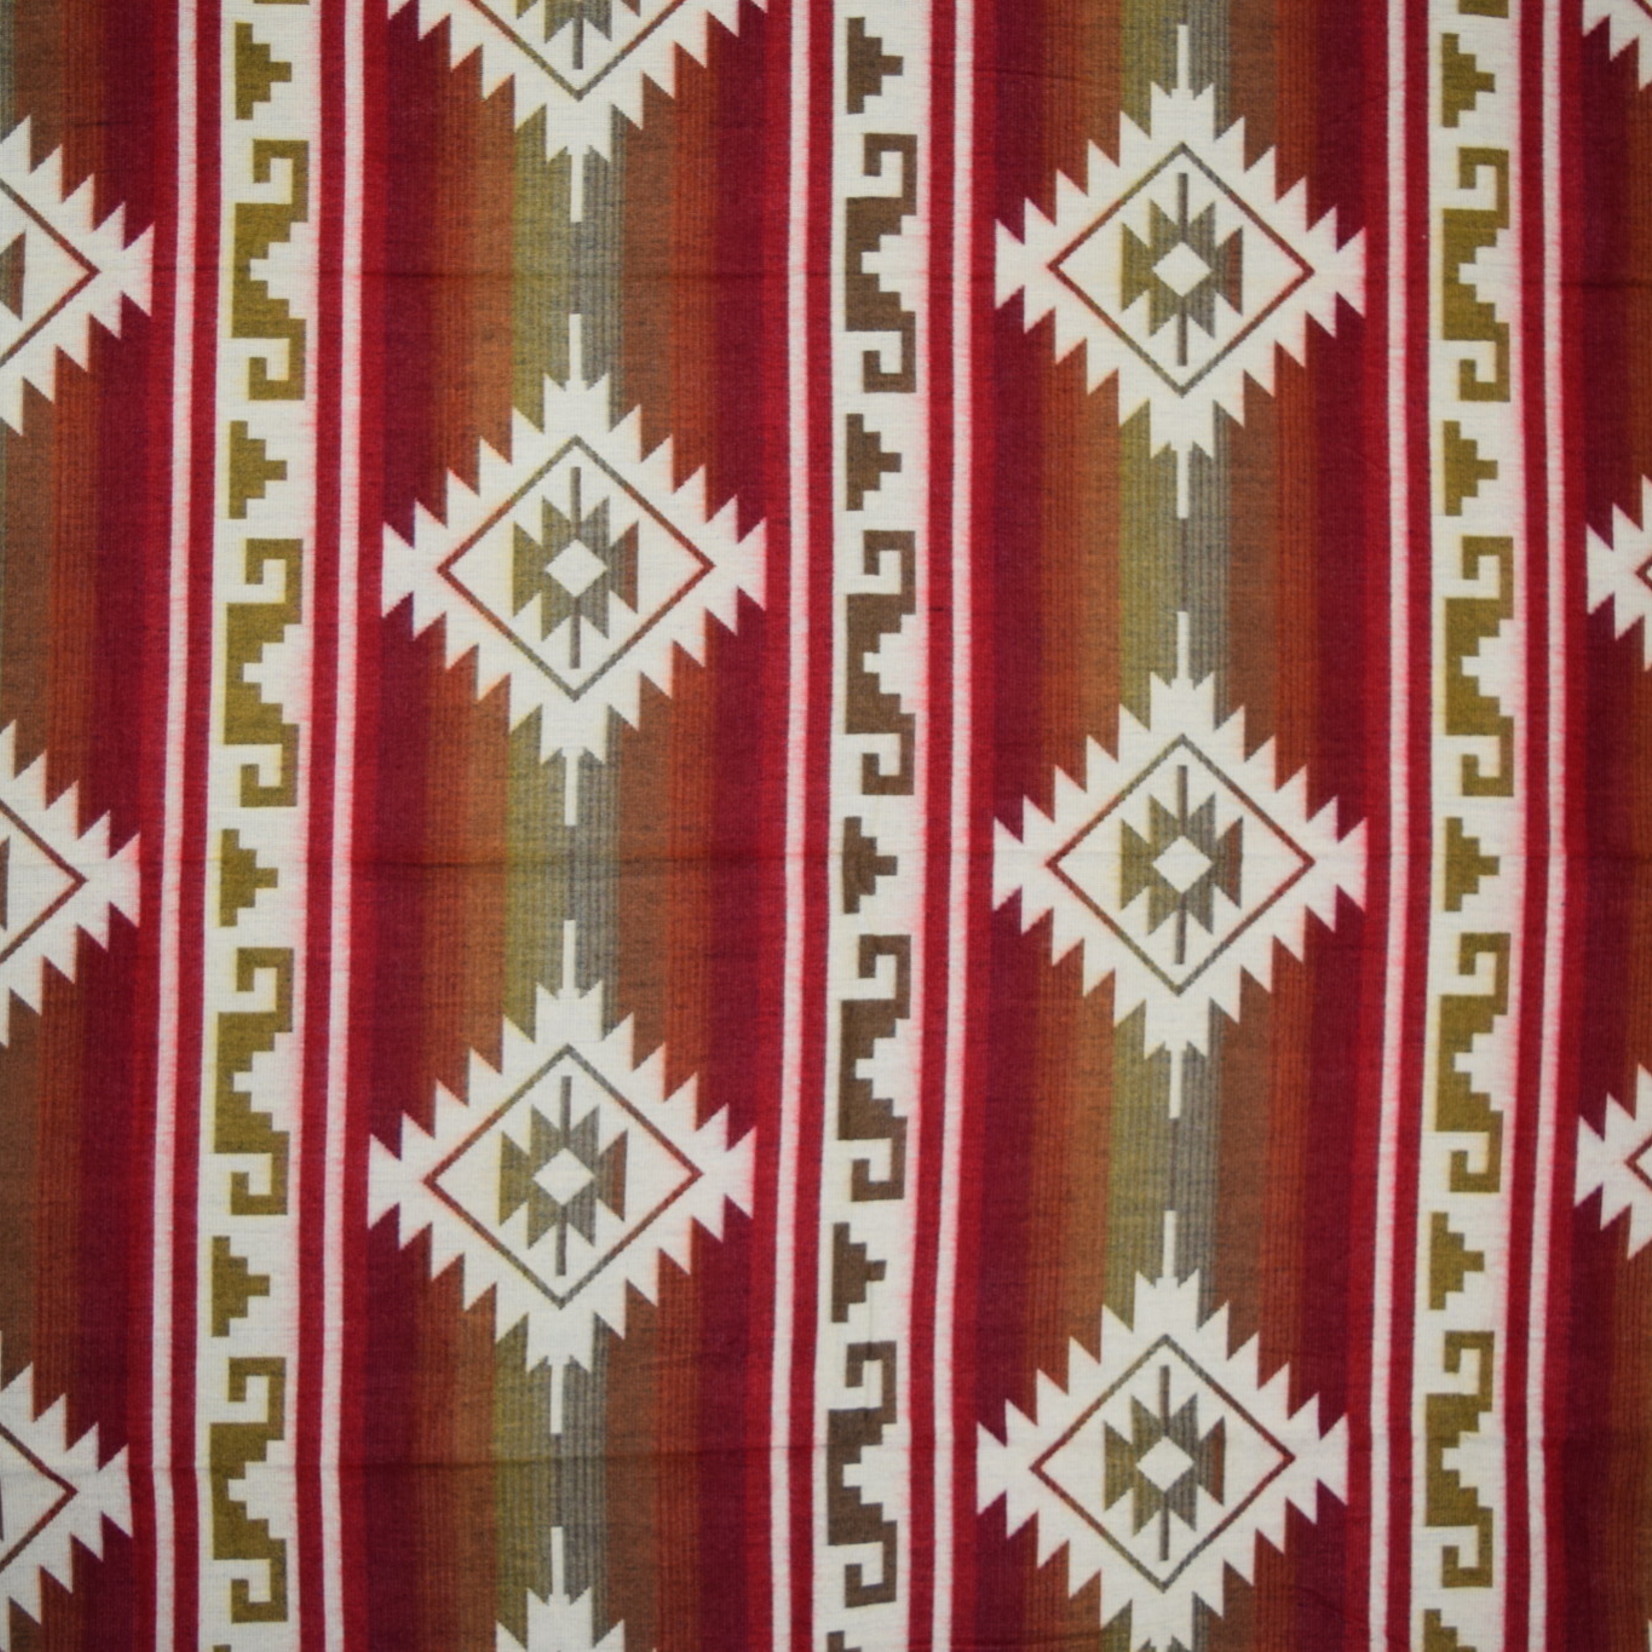 Wool Blankets - Red Border Thread